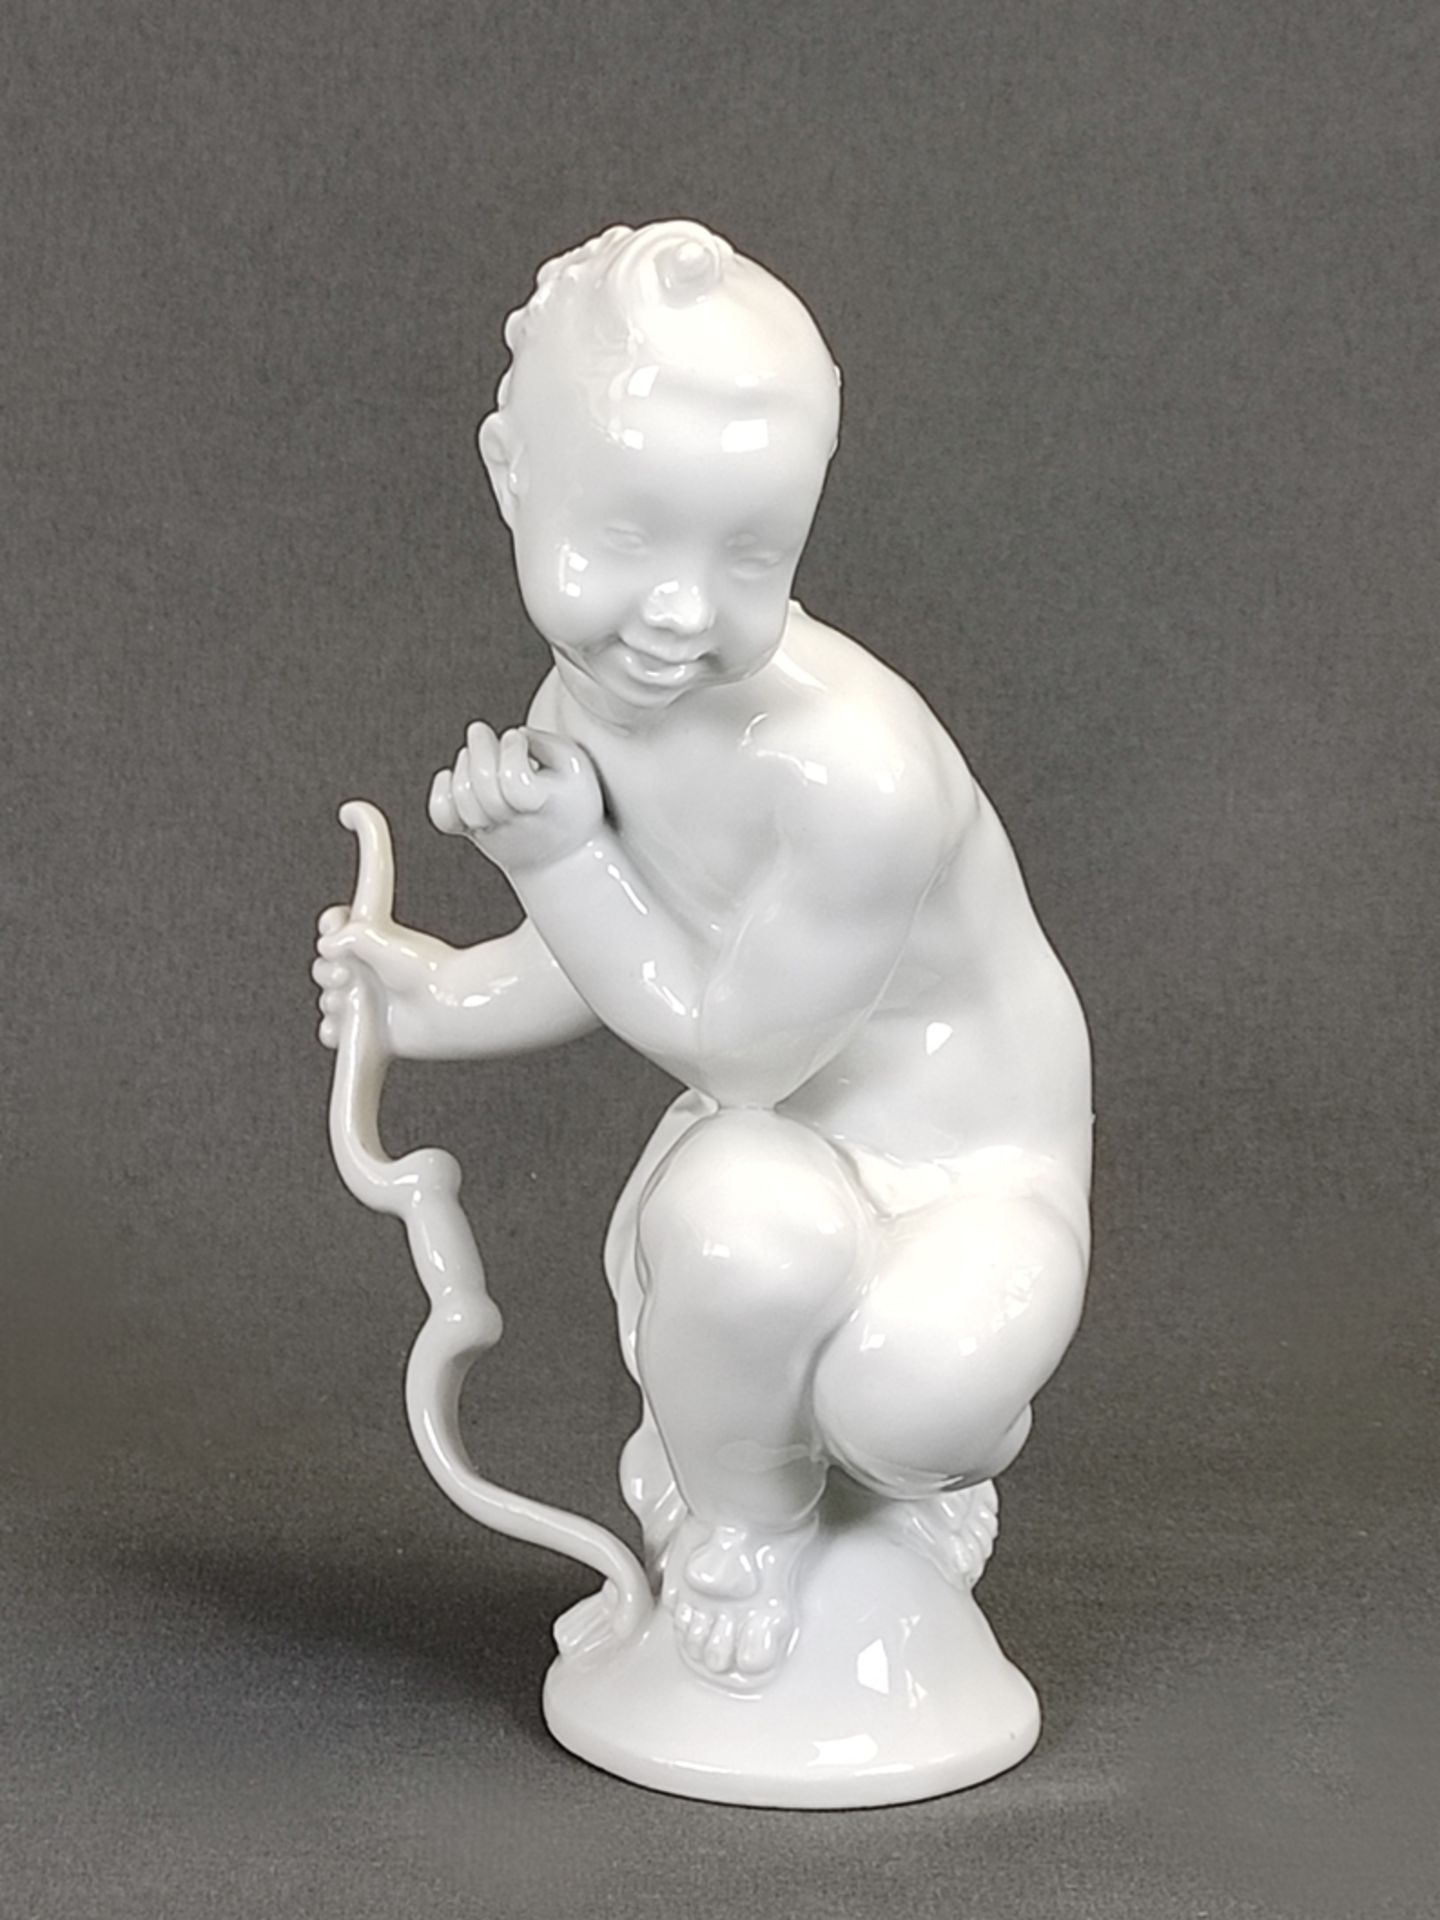 Porcelain figure "Cupid", Meissen sword mark, 1st choice, designed by Paul Scheurich (1883 - 1945)